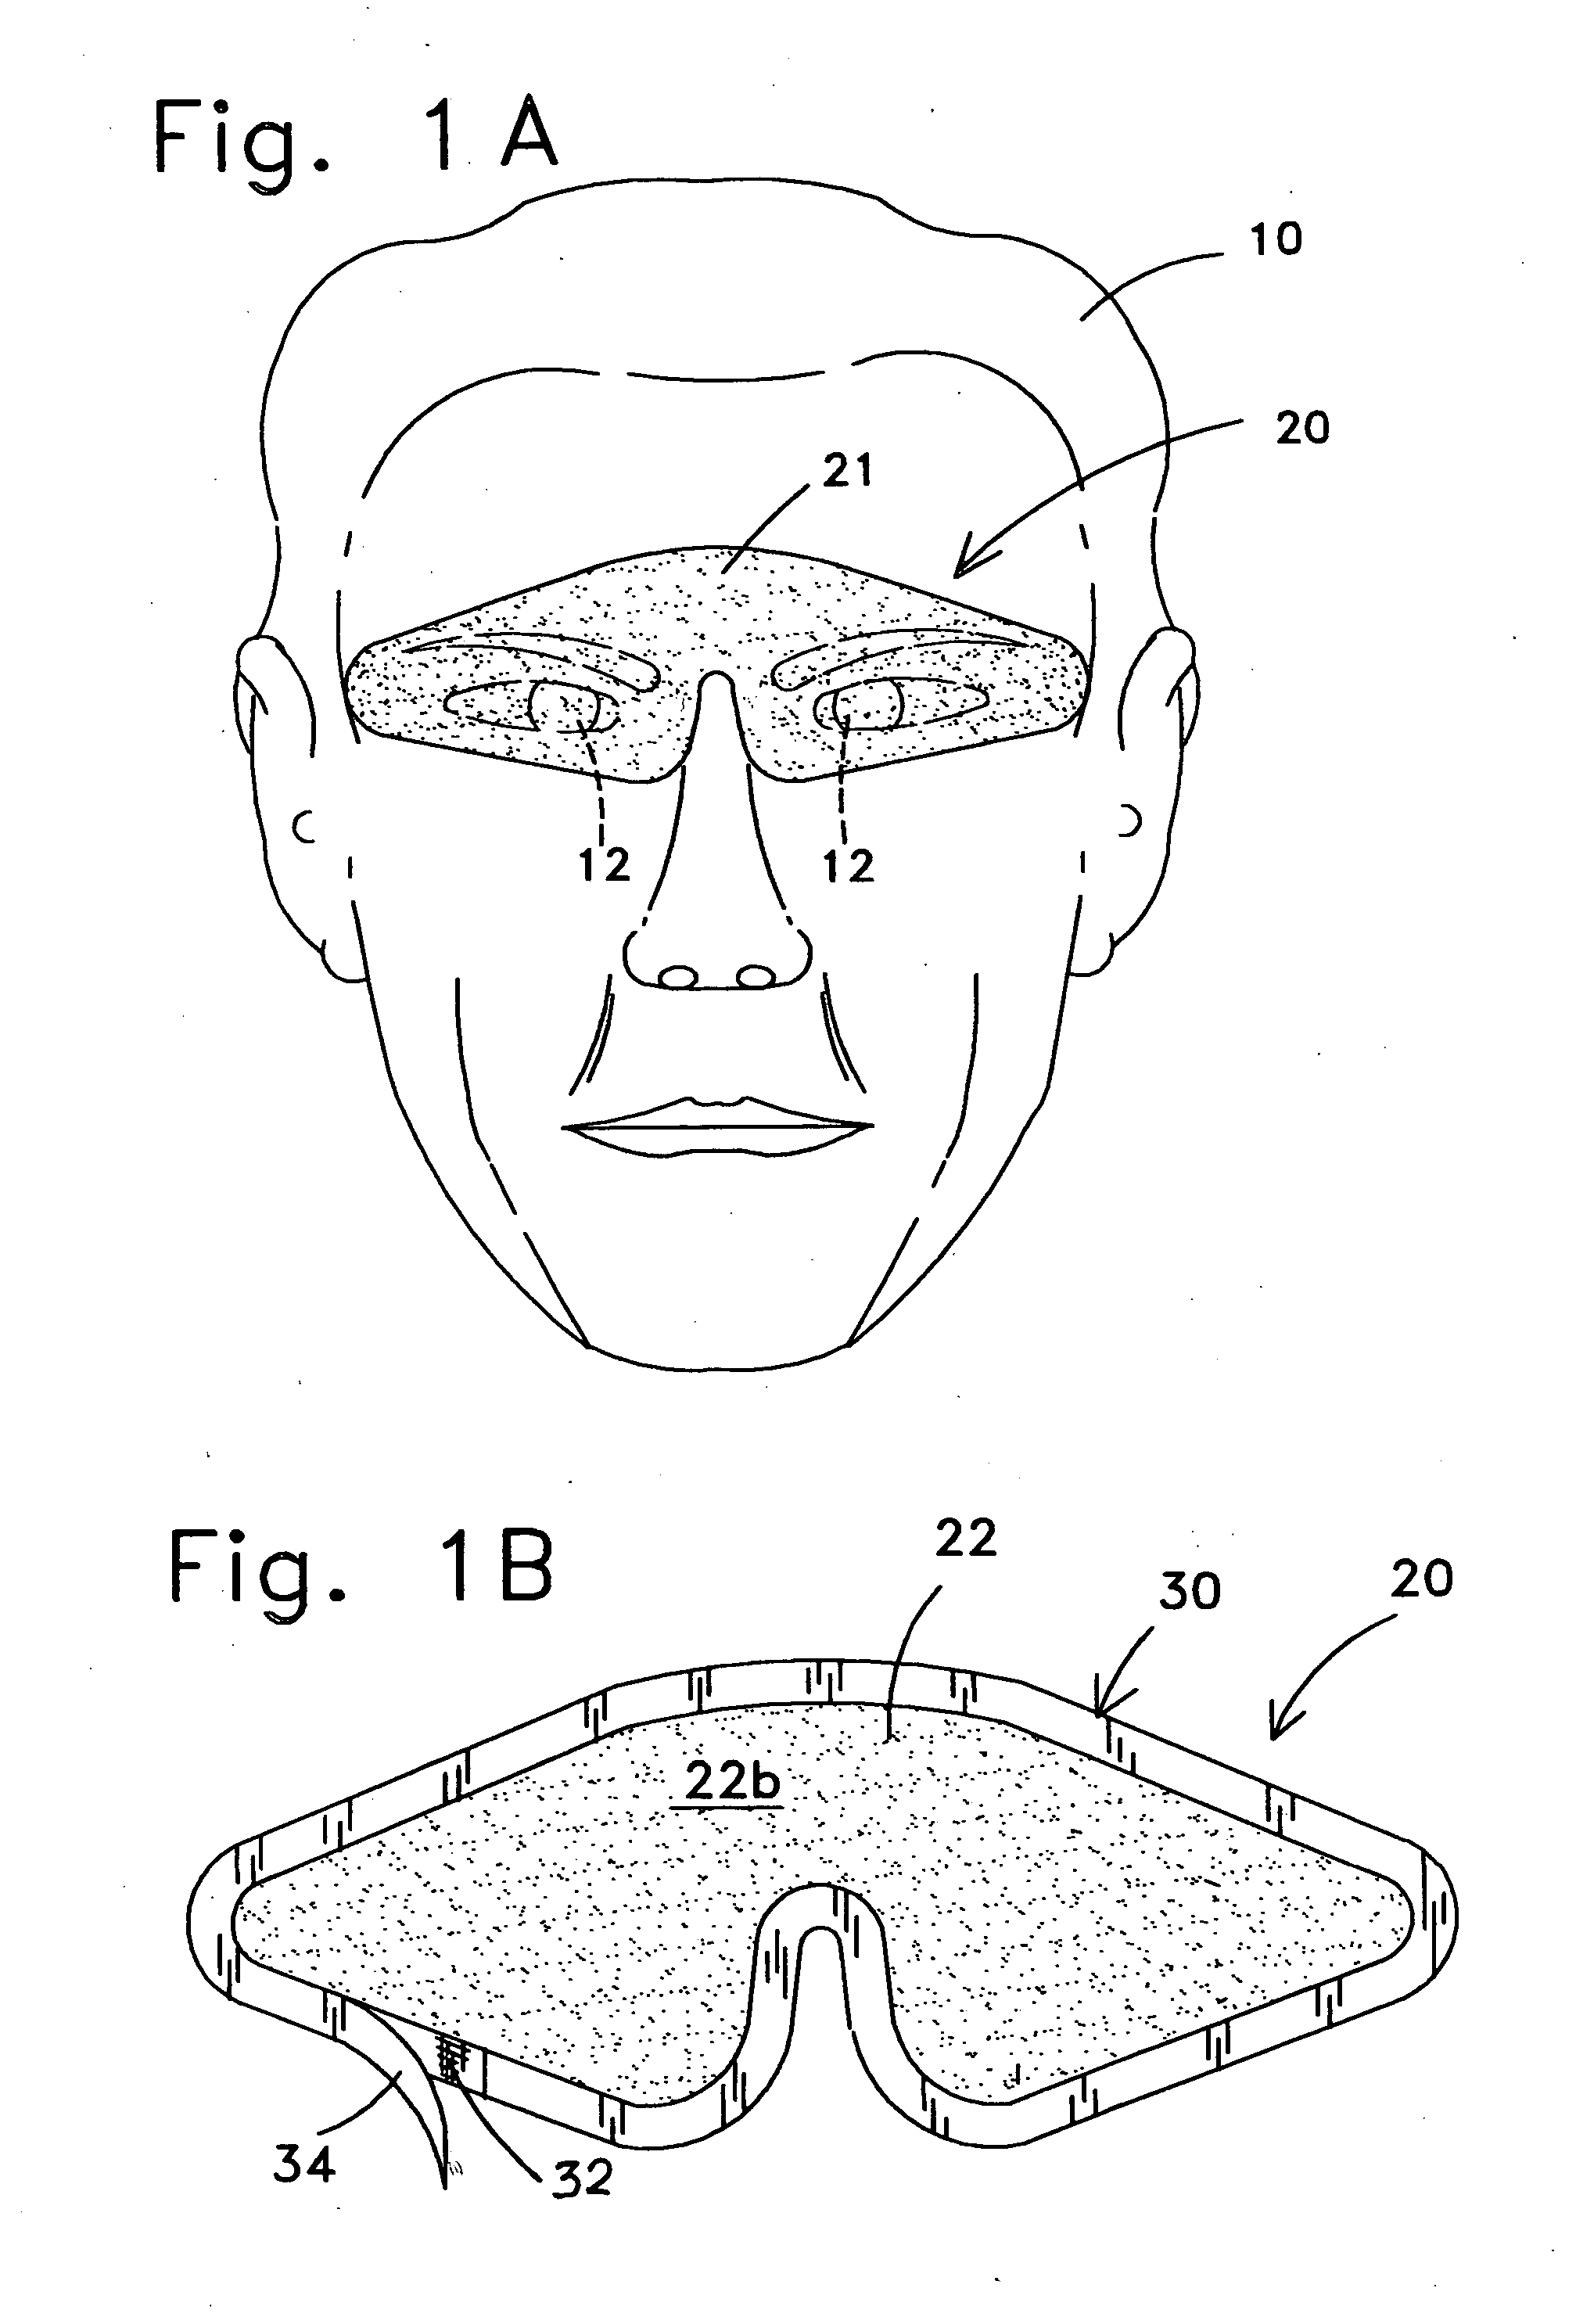 Multi-use eye mask or shield